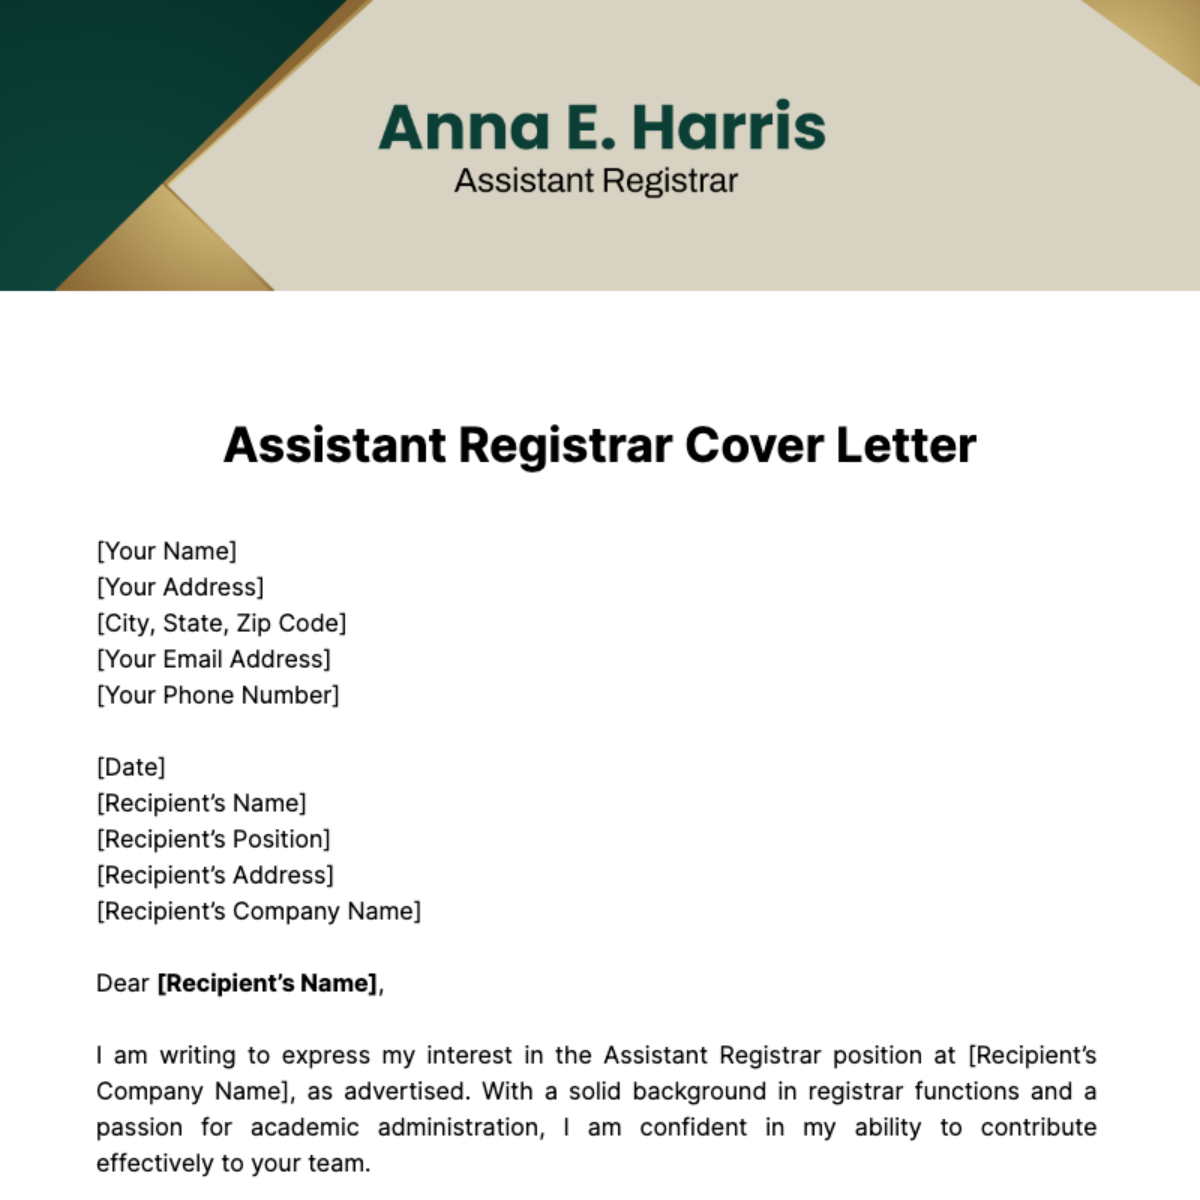 Assistant Registrar Cover Letter Template